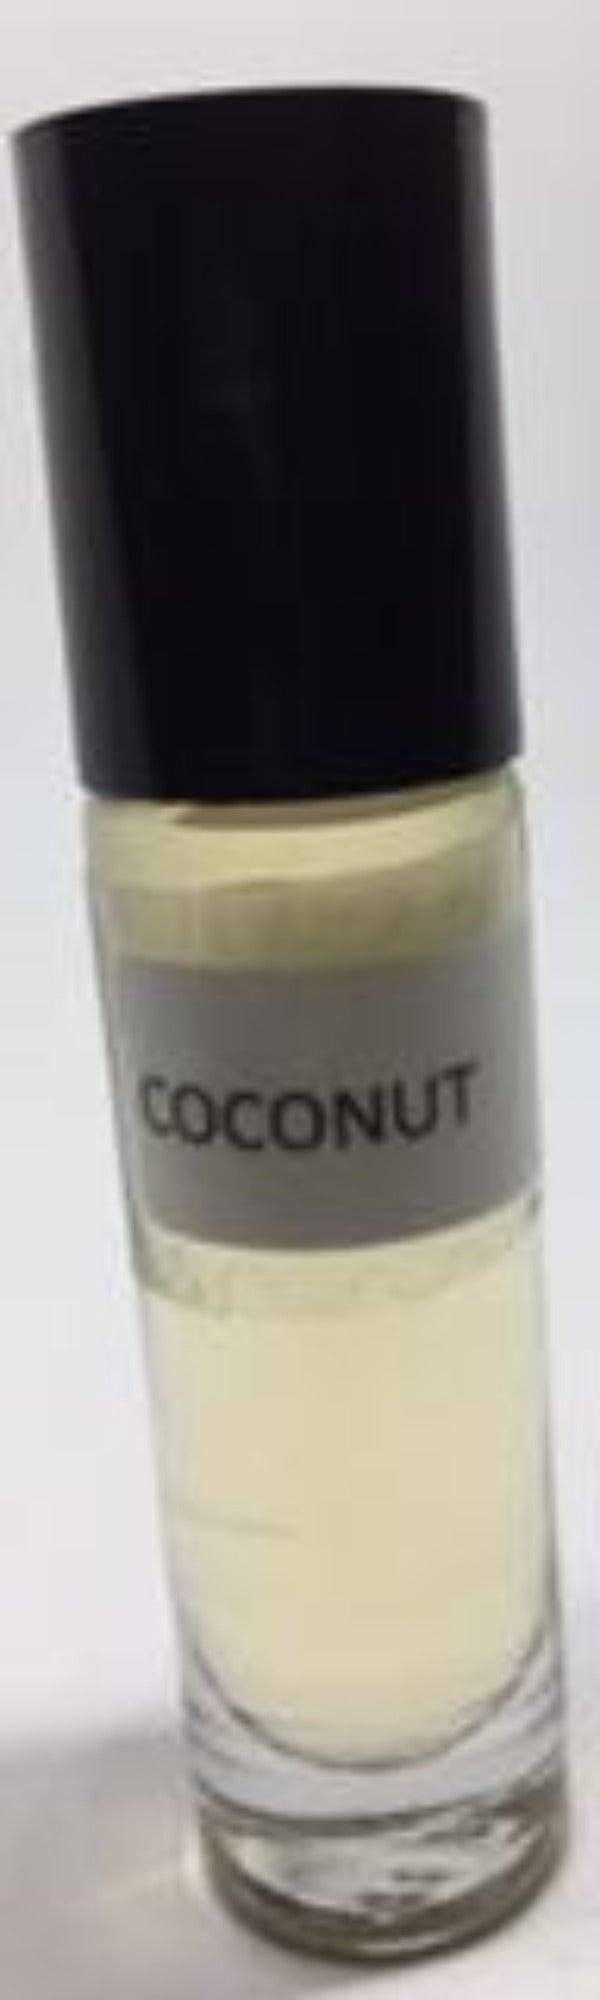 Coconut: Fragrance (Perfume)Body Oil Unisex